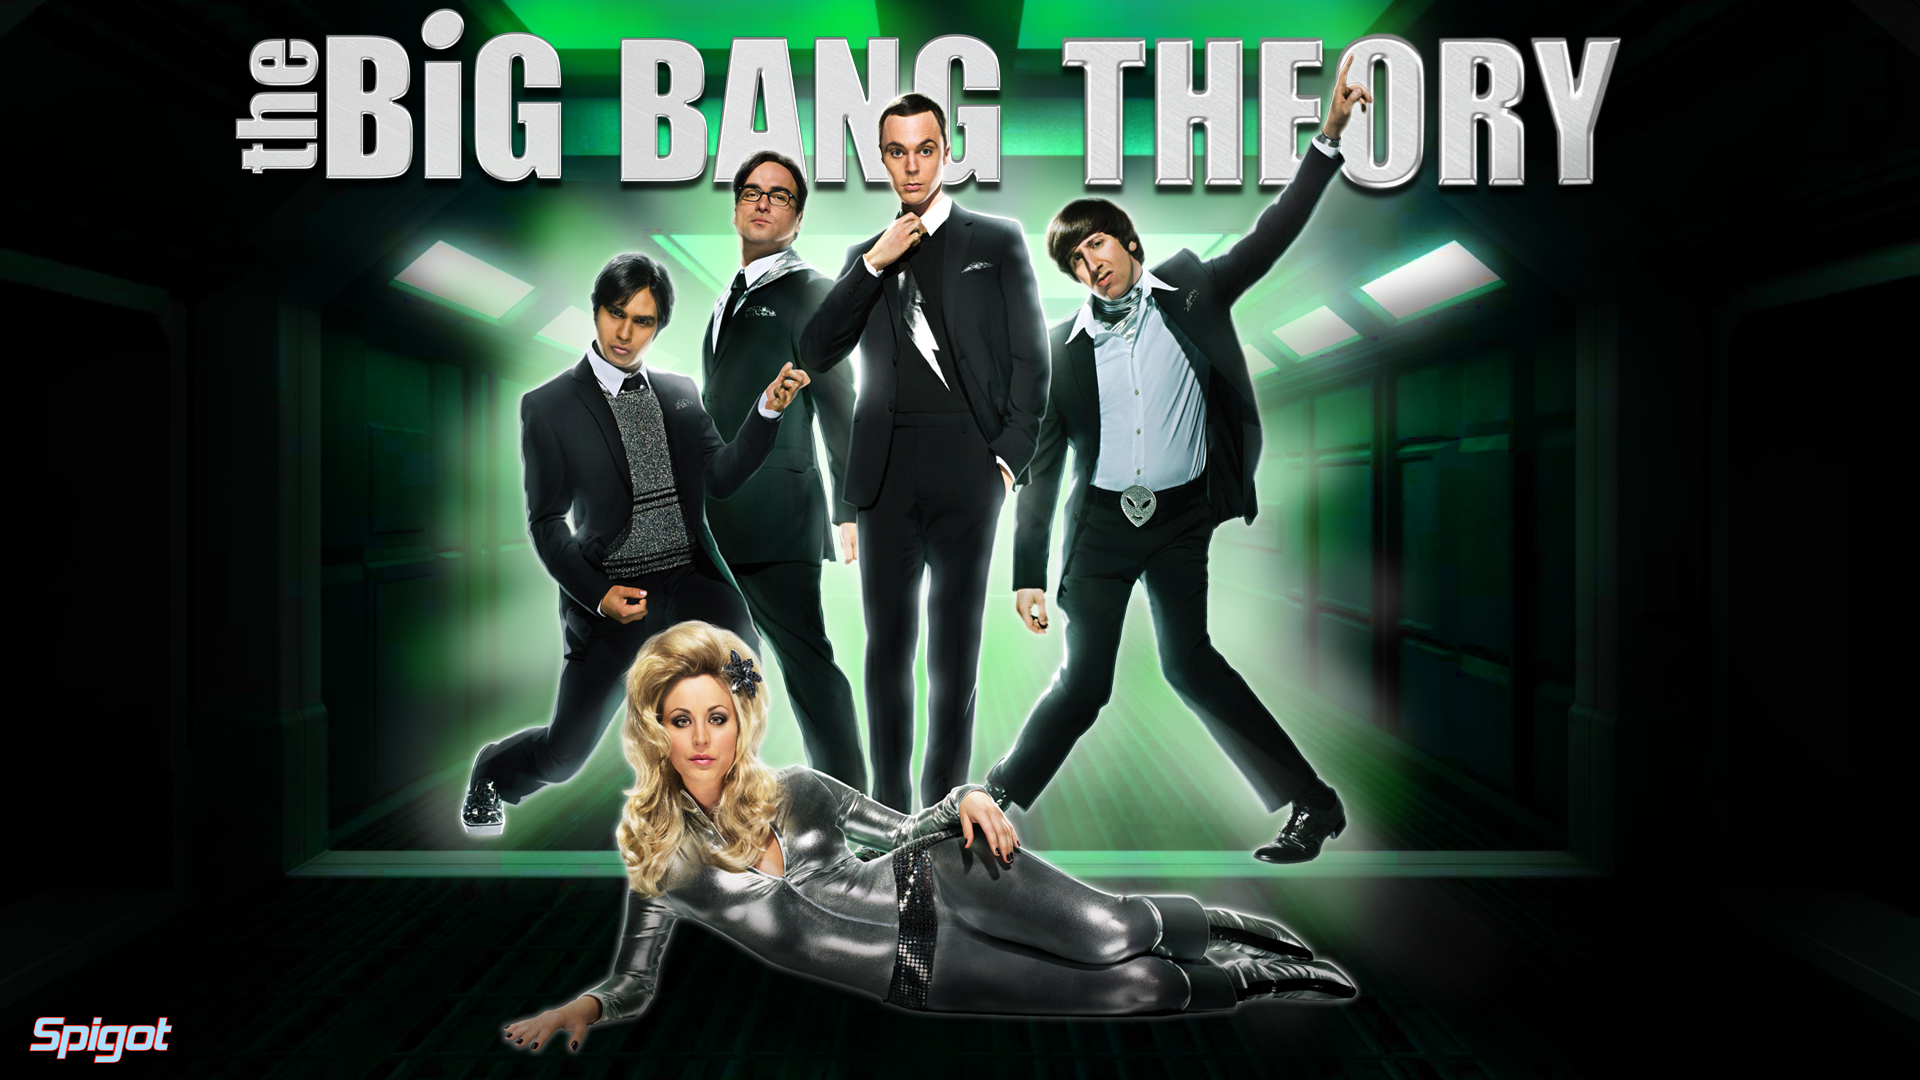 TV Show the big bang theory 281895   Wallpaper Hd 3D